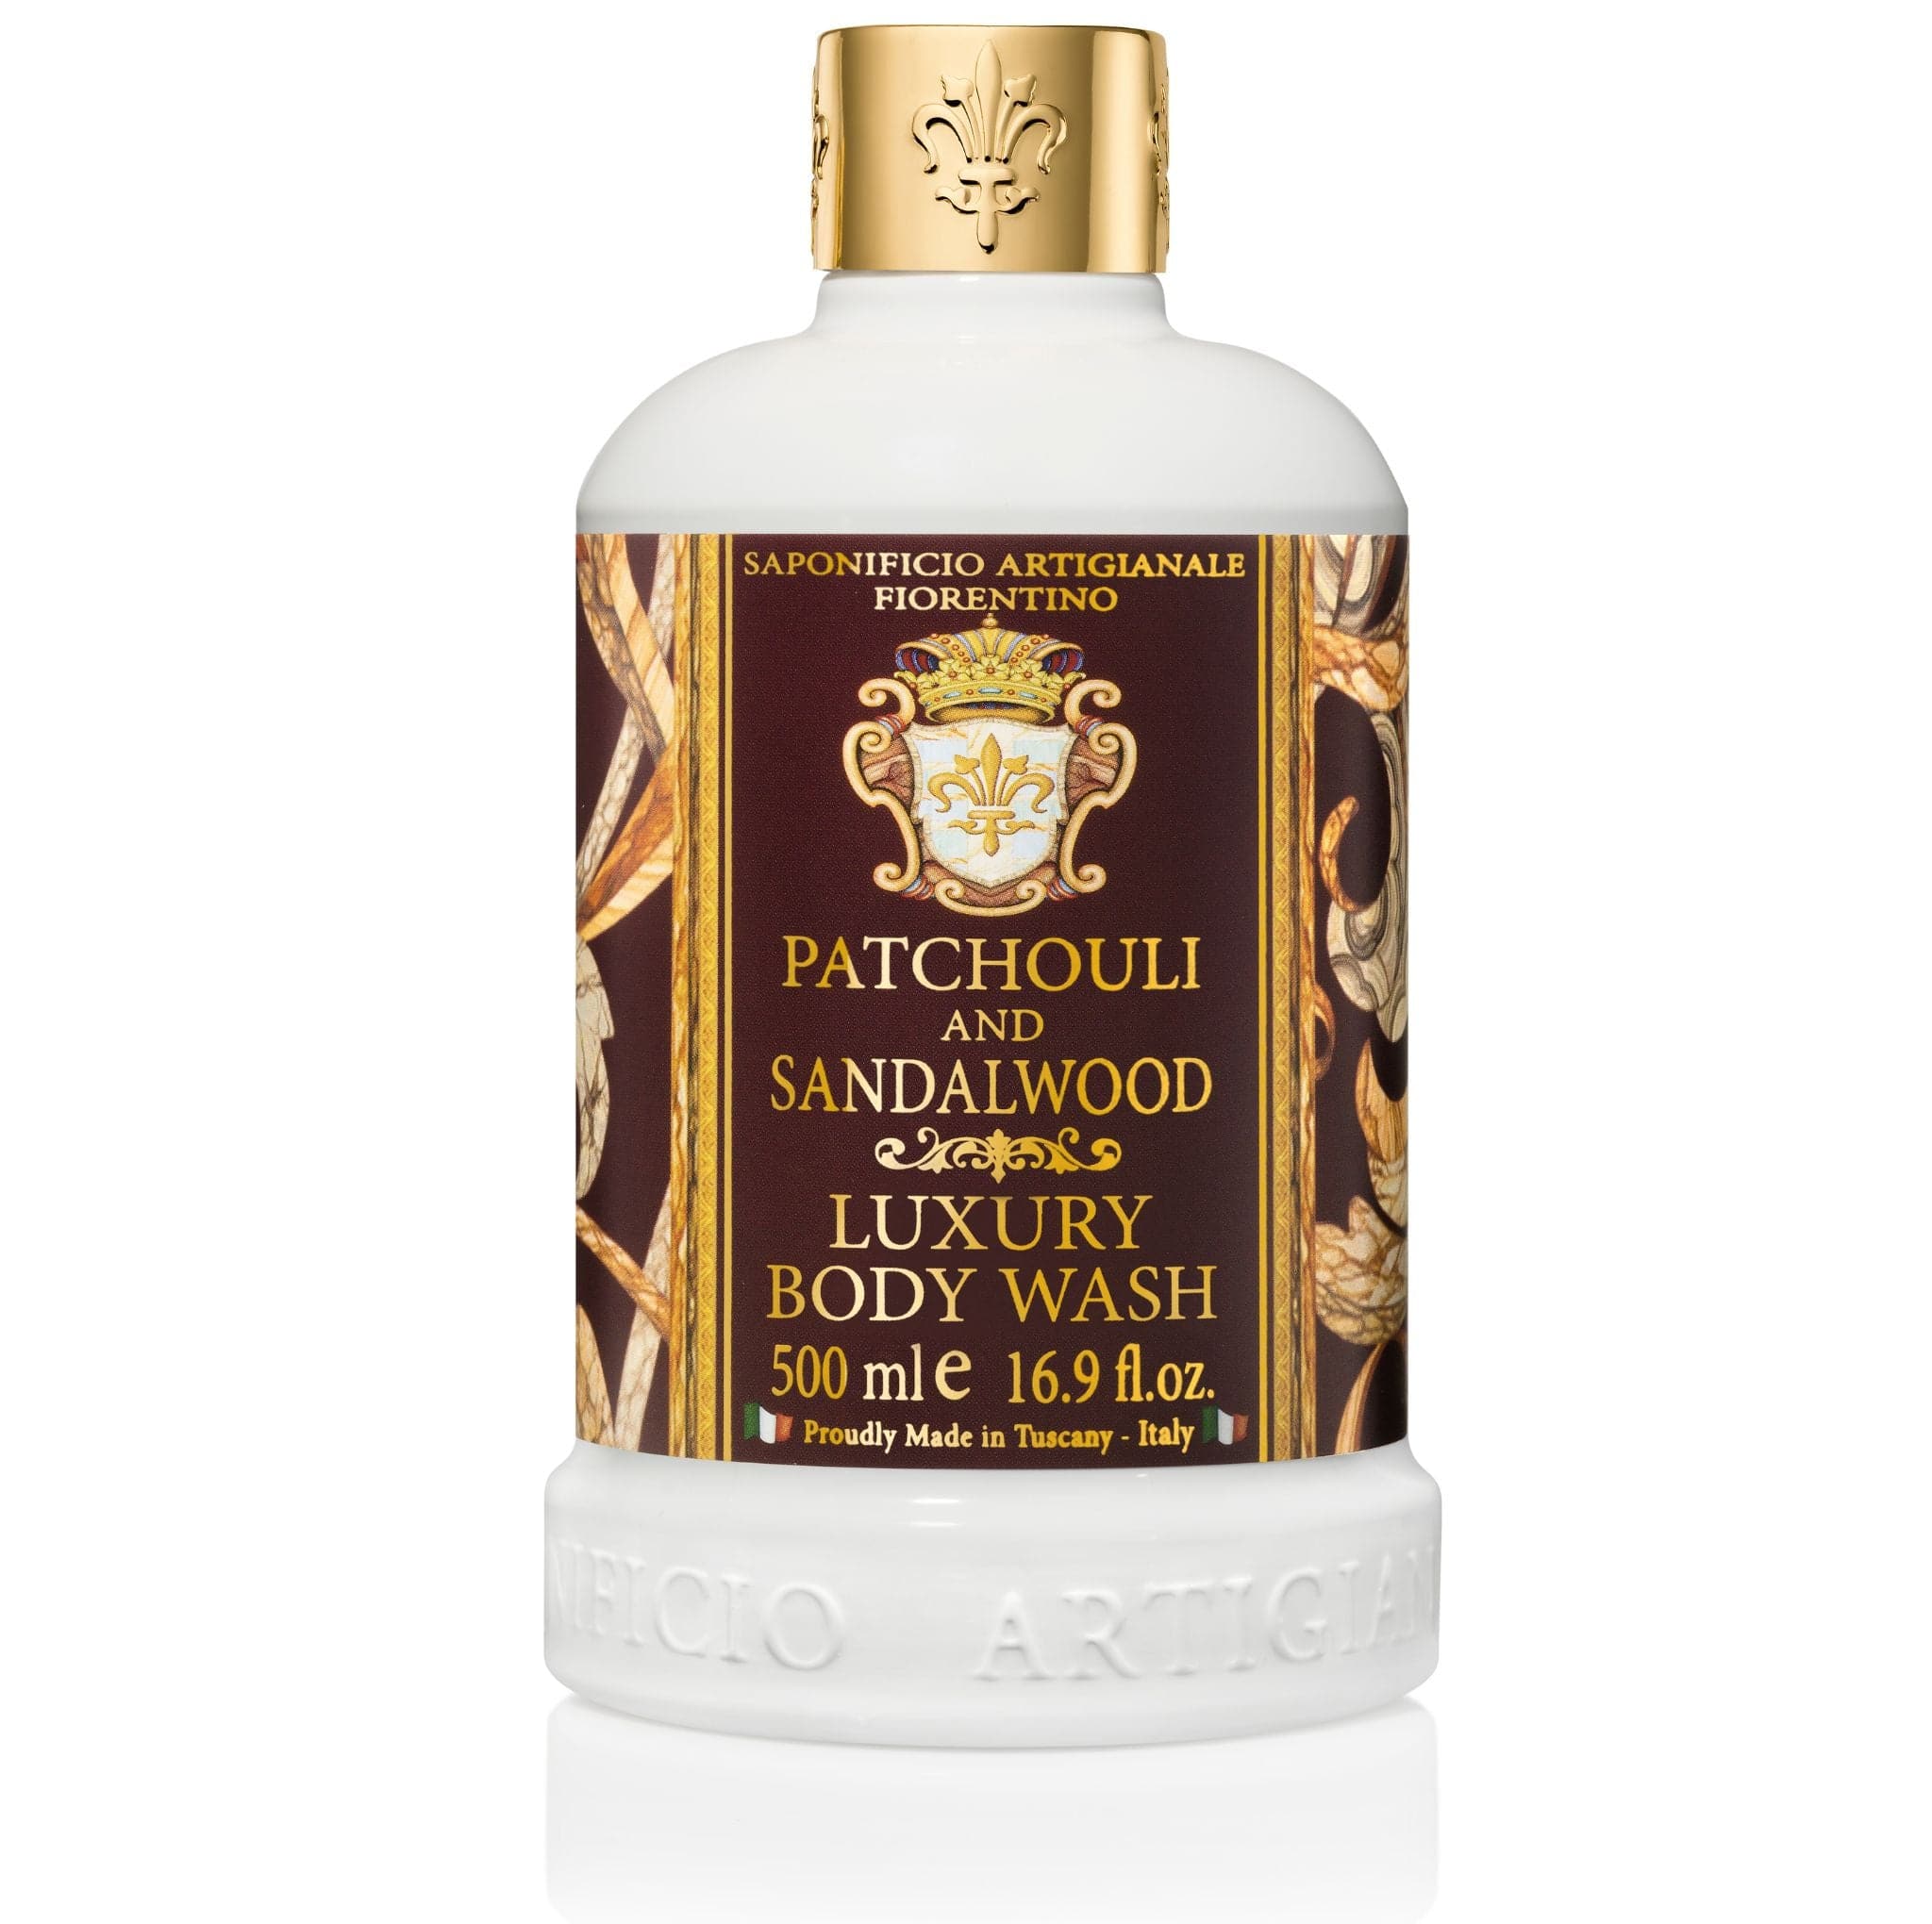 Saponificio Artigianale Fiorentino Liquid Hand Soap Bundle Set Patchouli & Sandalwood Liquid Soap + Bodywash + 3x125g Bar Soap Brand